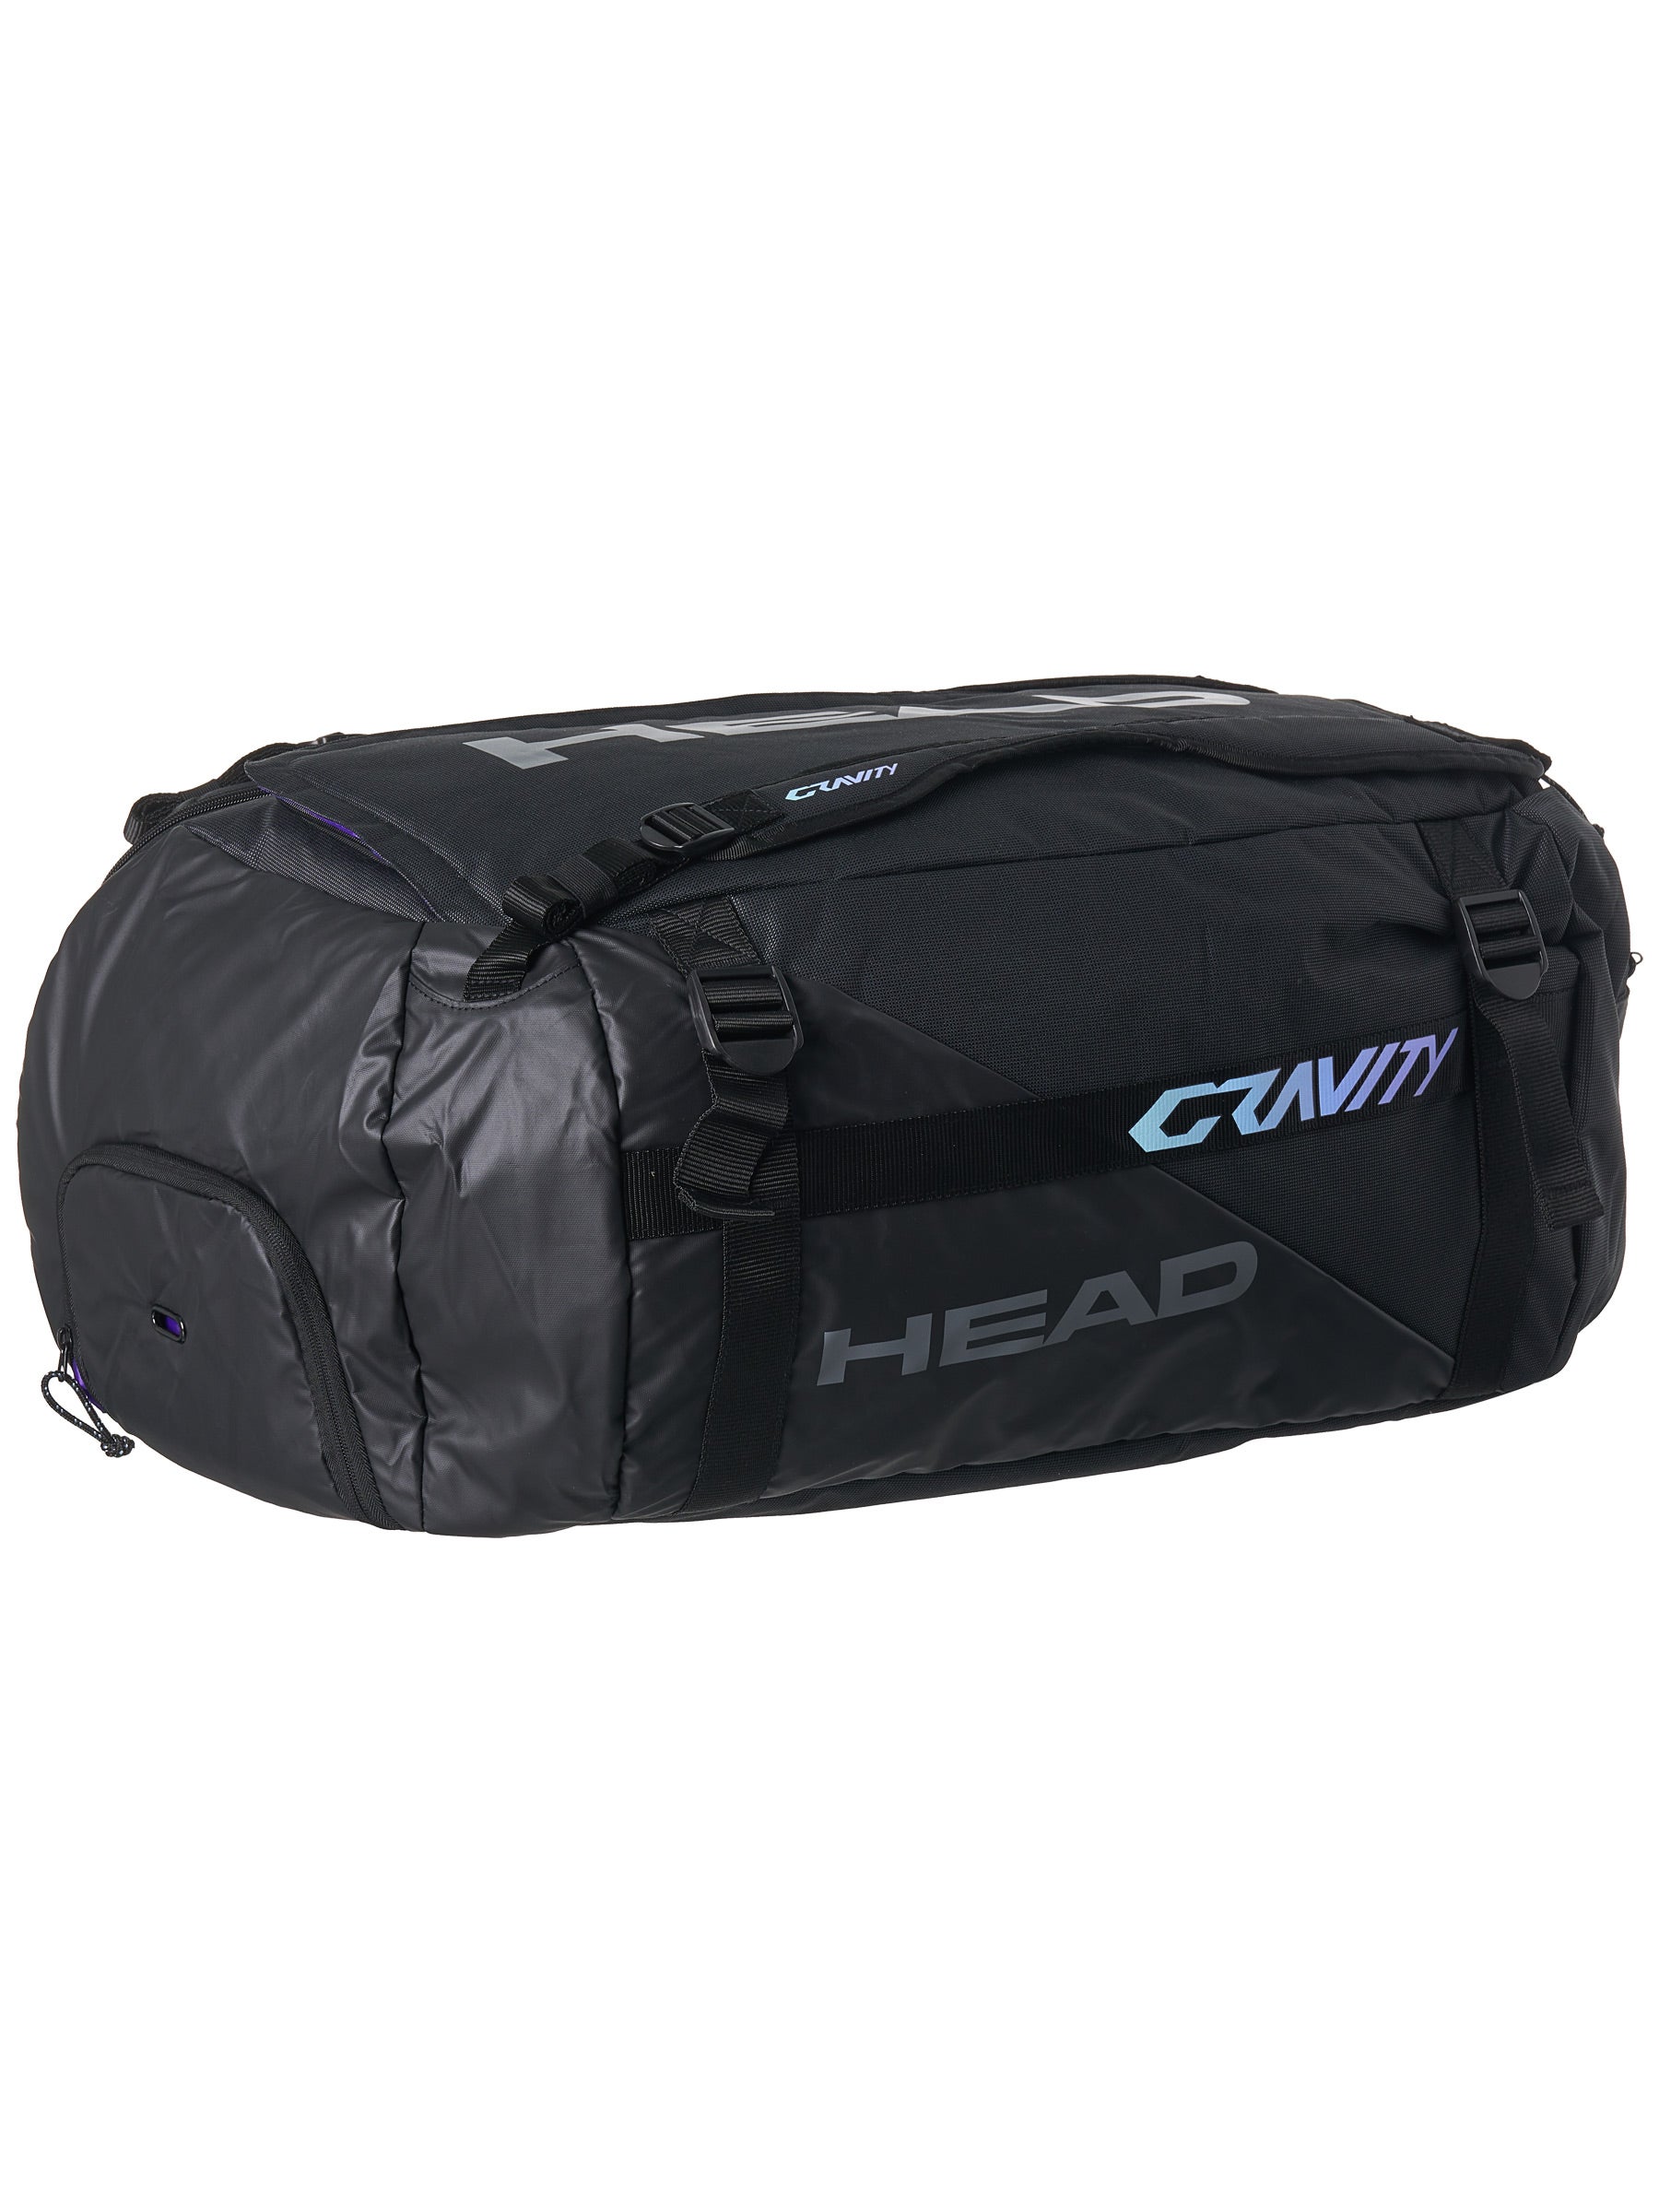 Details about   Head Gravity Duffle Tennis Bag 12pk